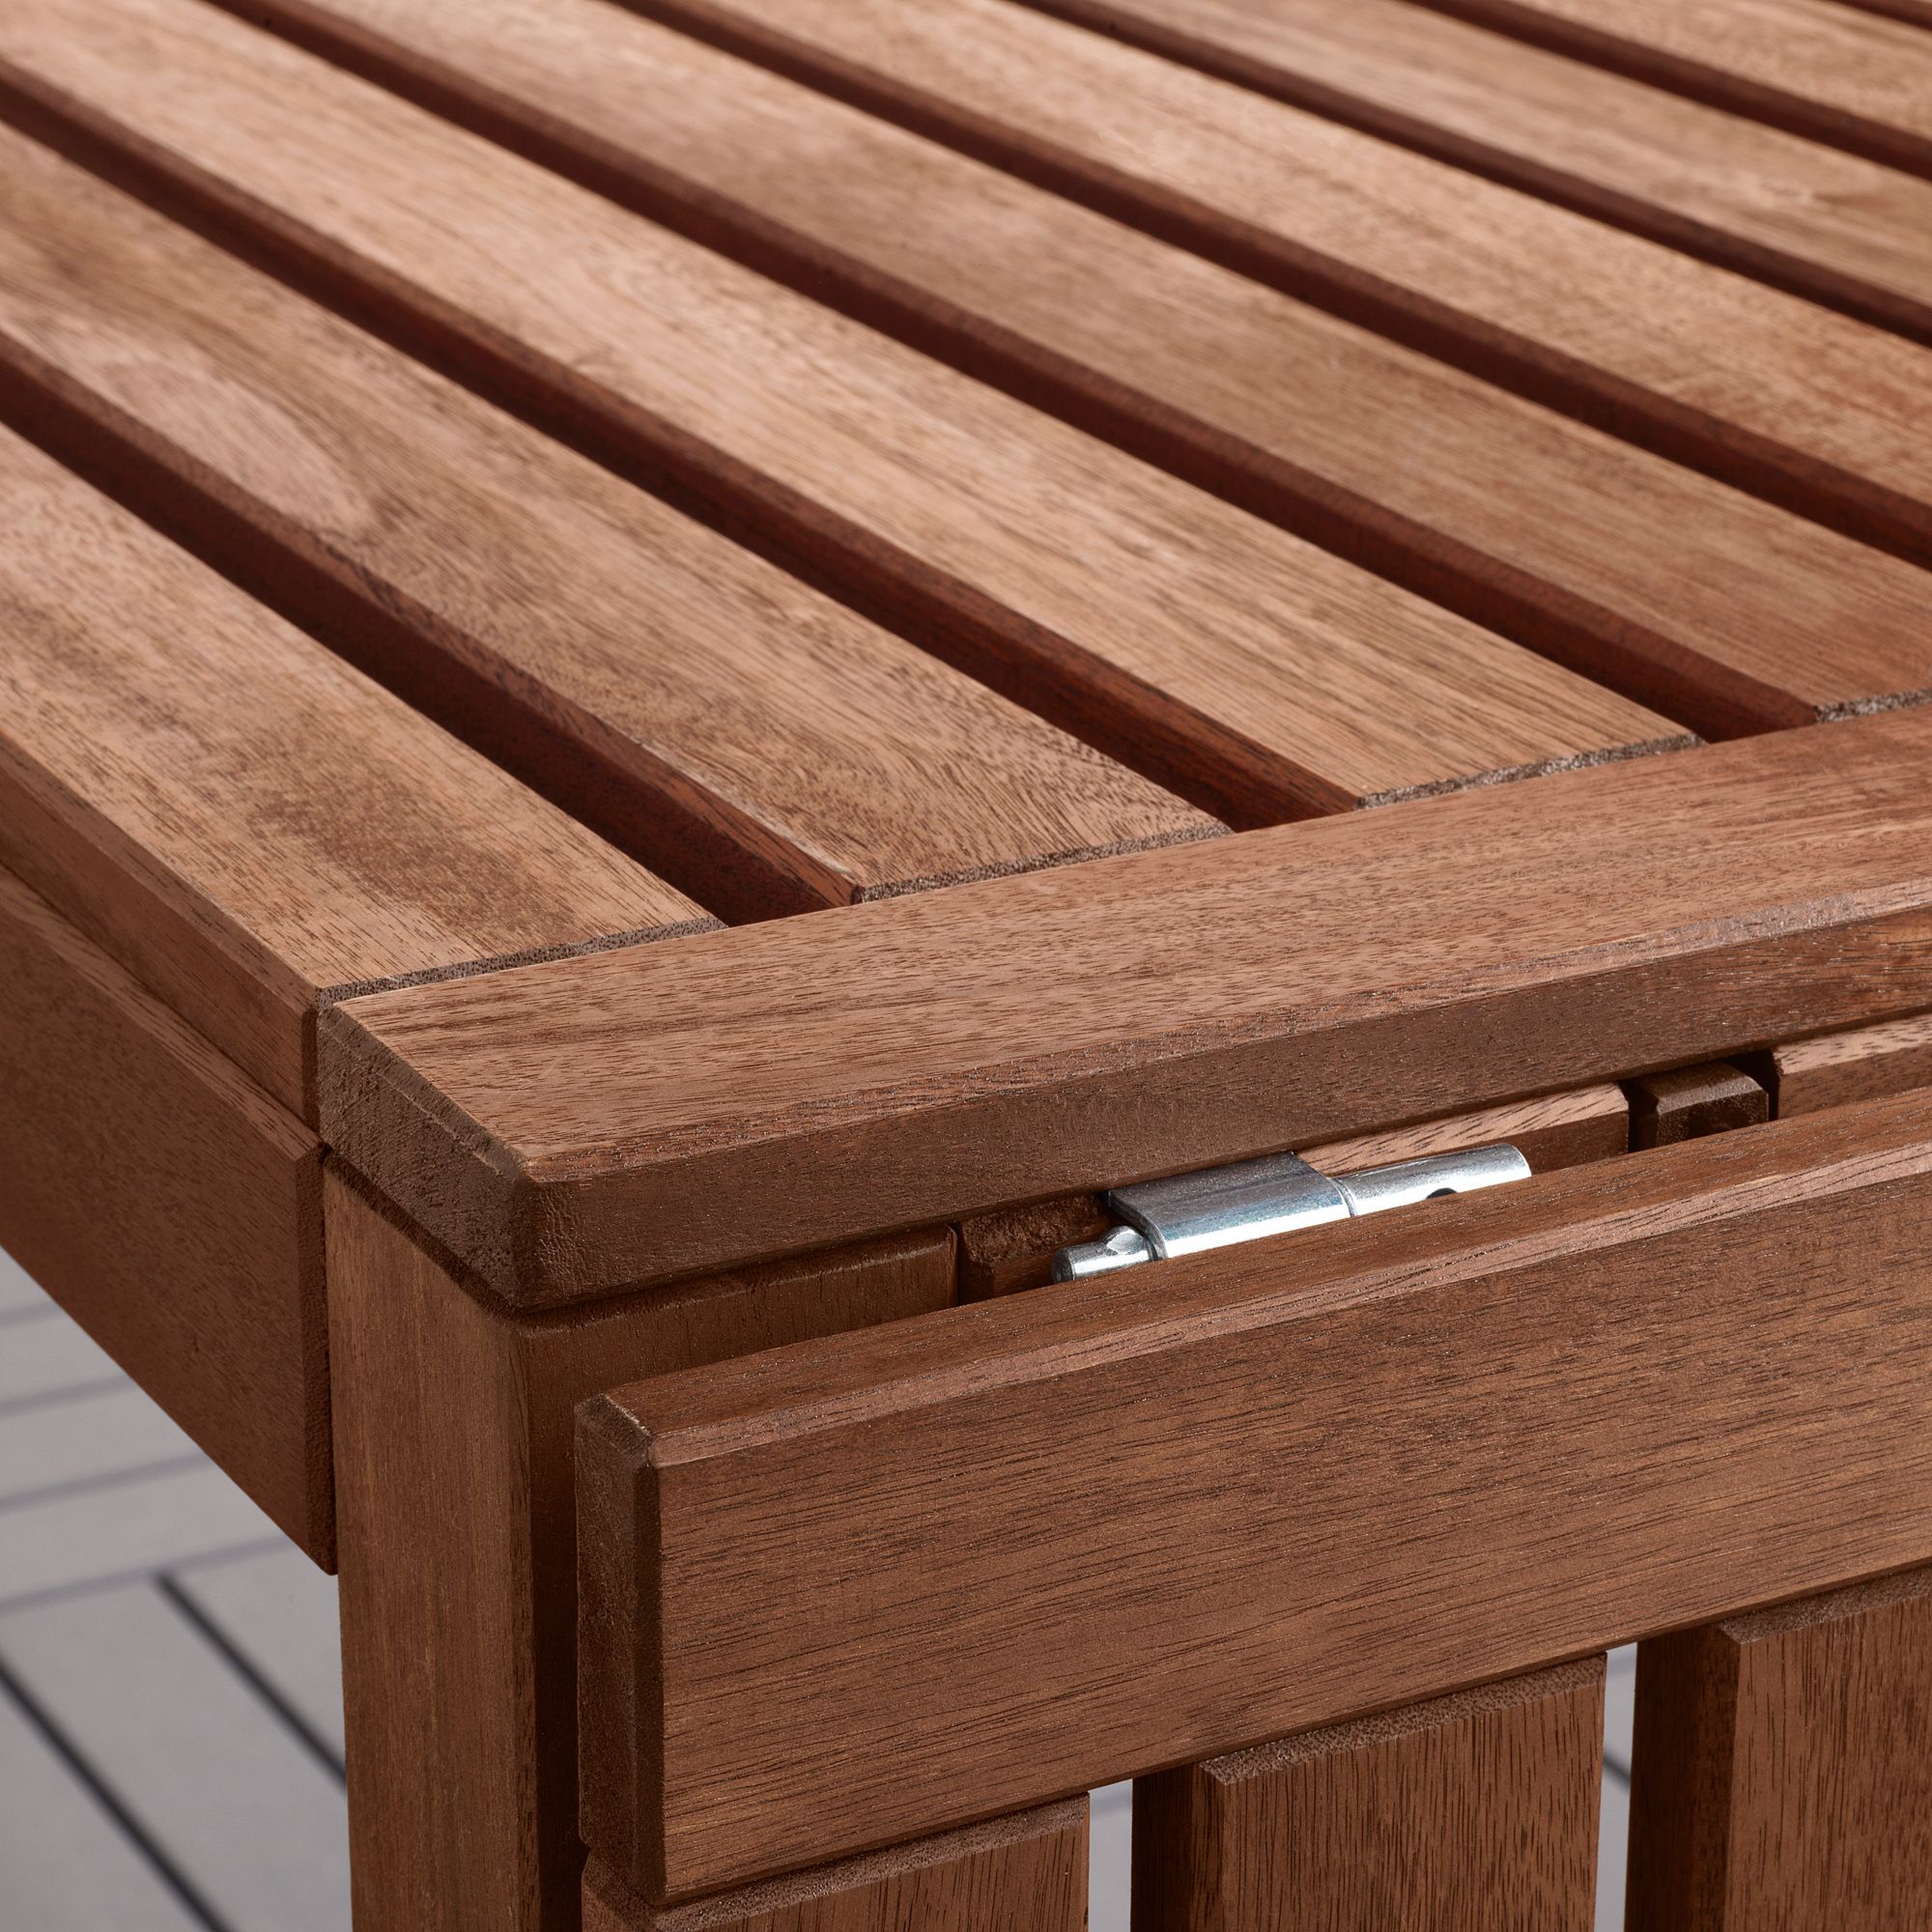 Ikea Lietuva In Recent Mango Wood Outdoor Tables (View 10 of 15)